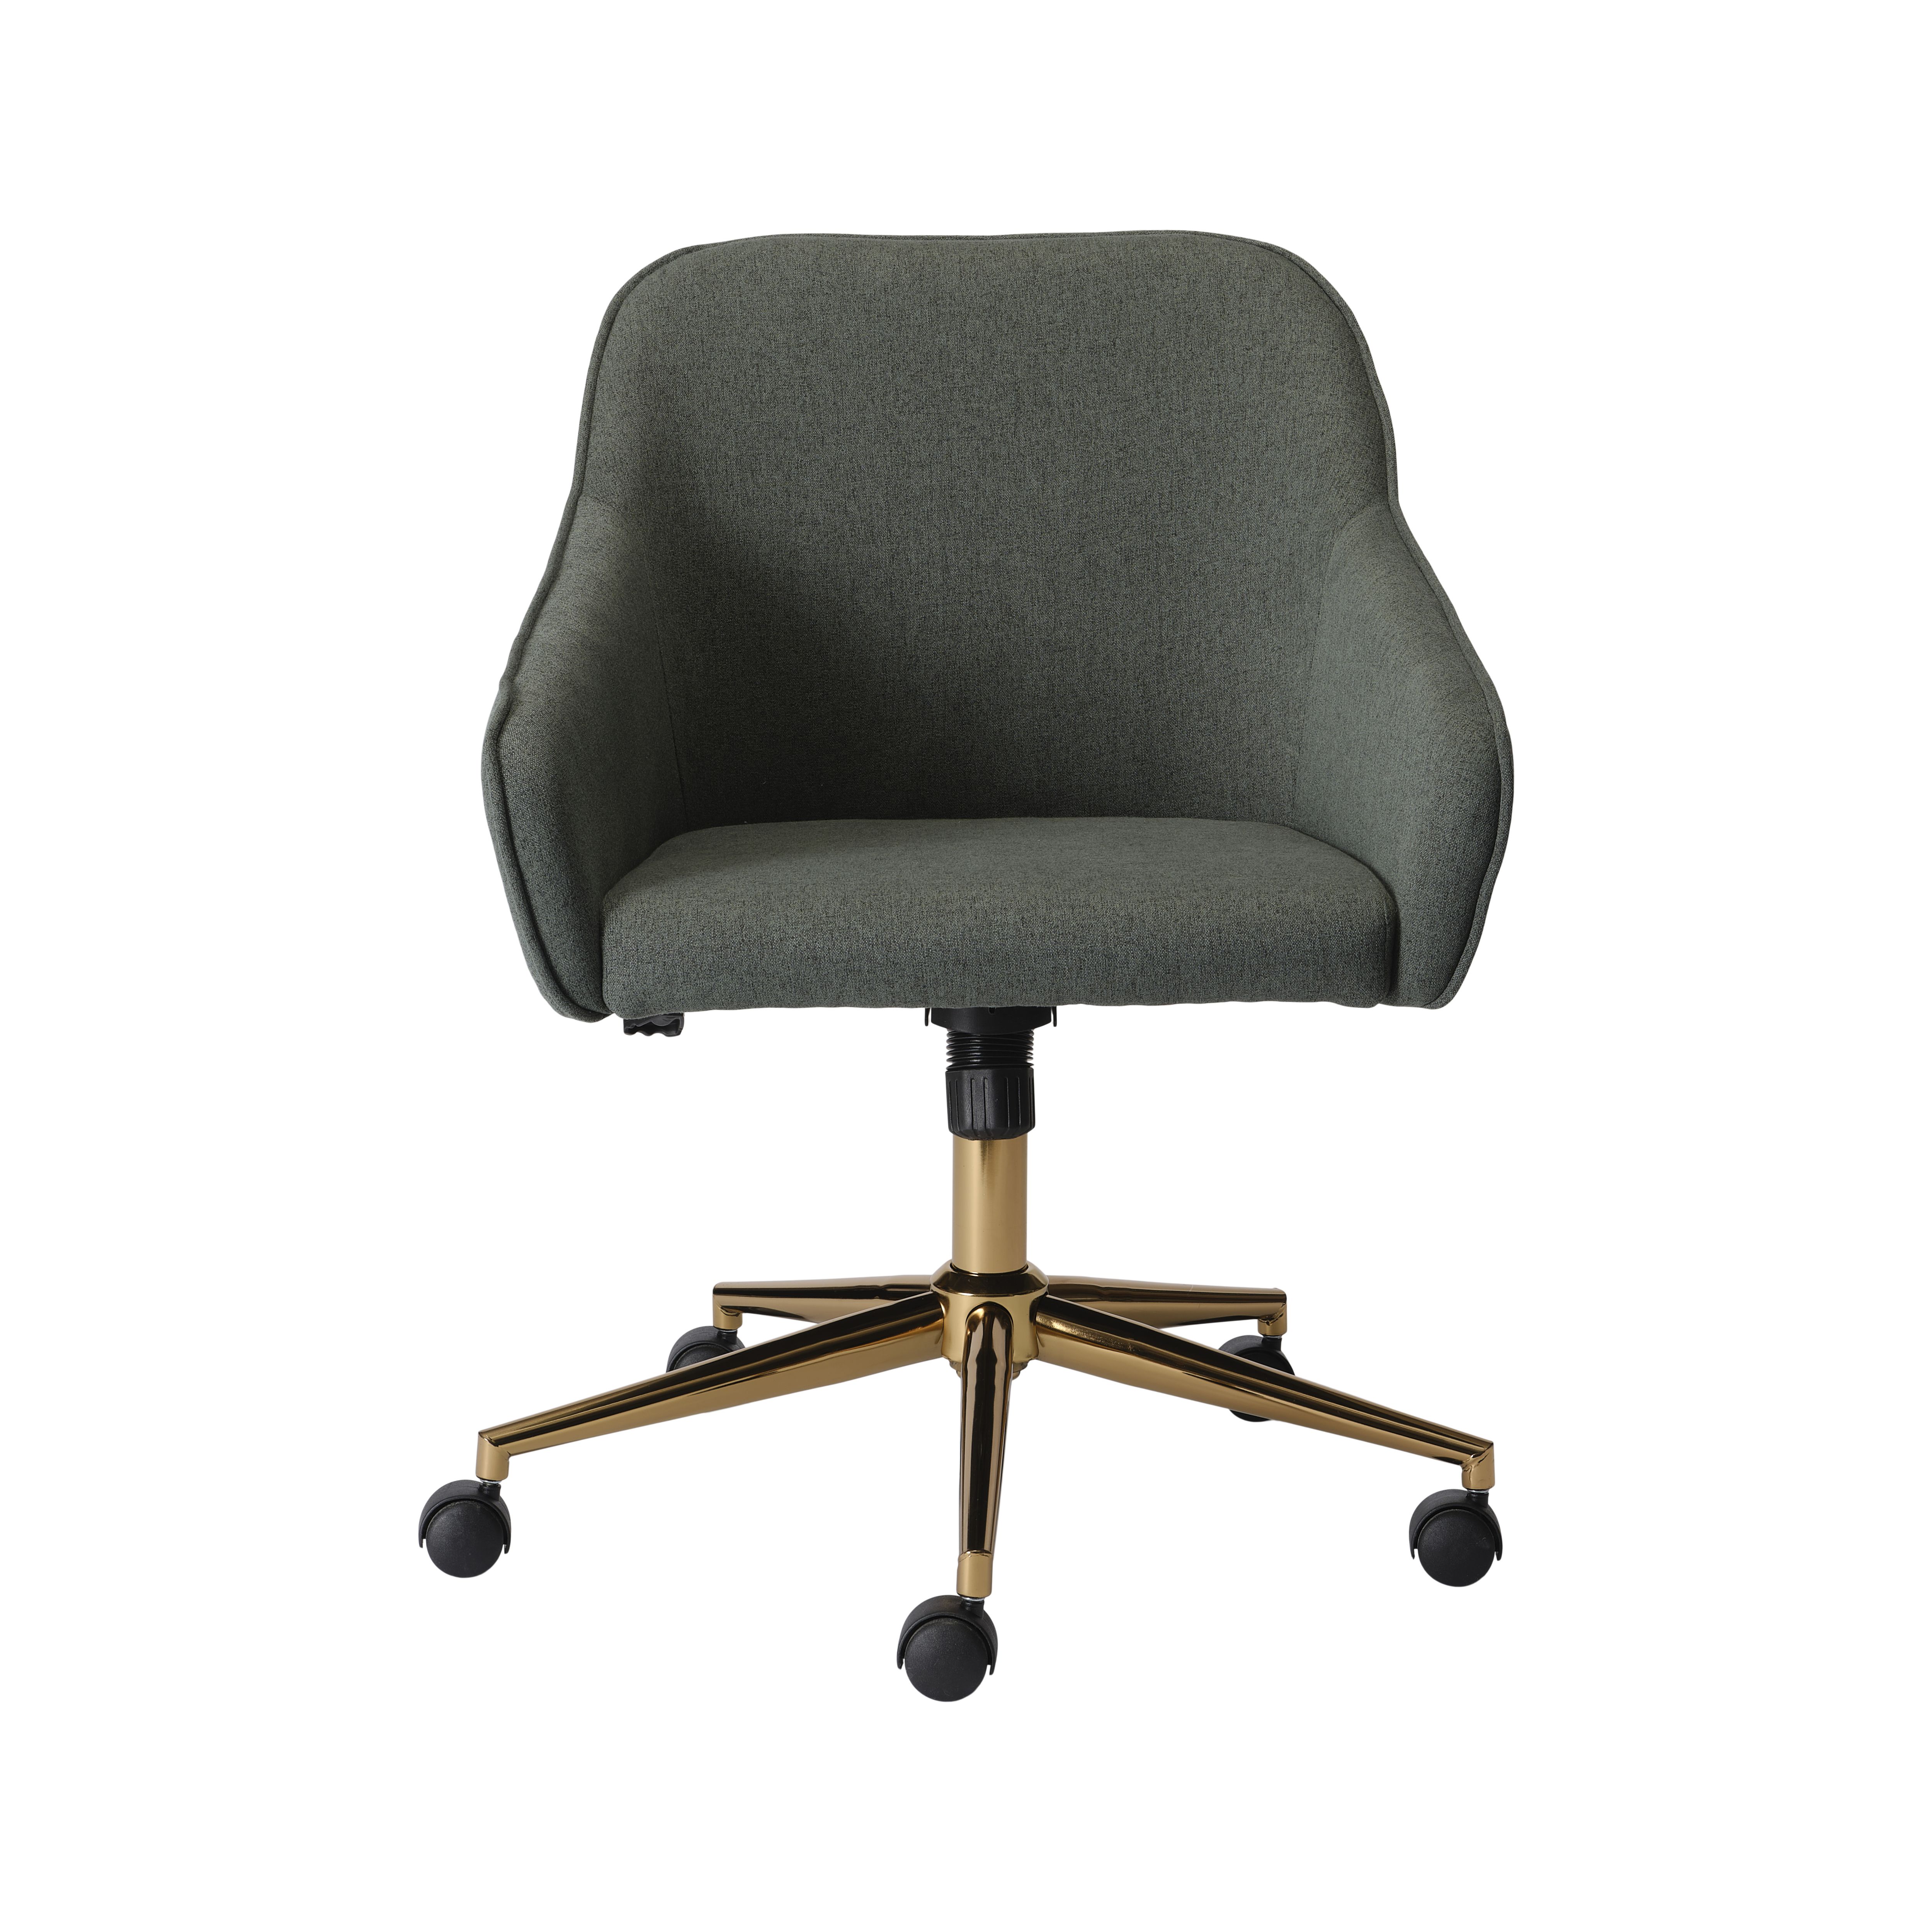 Green Office chair